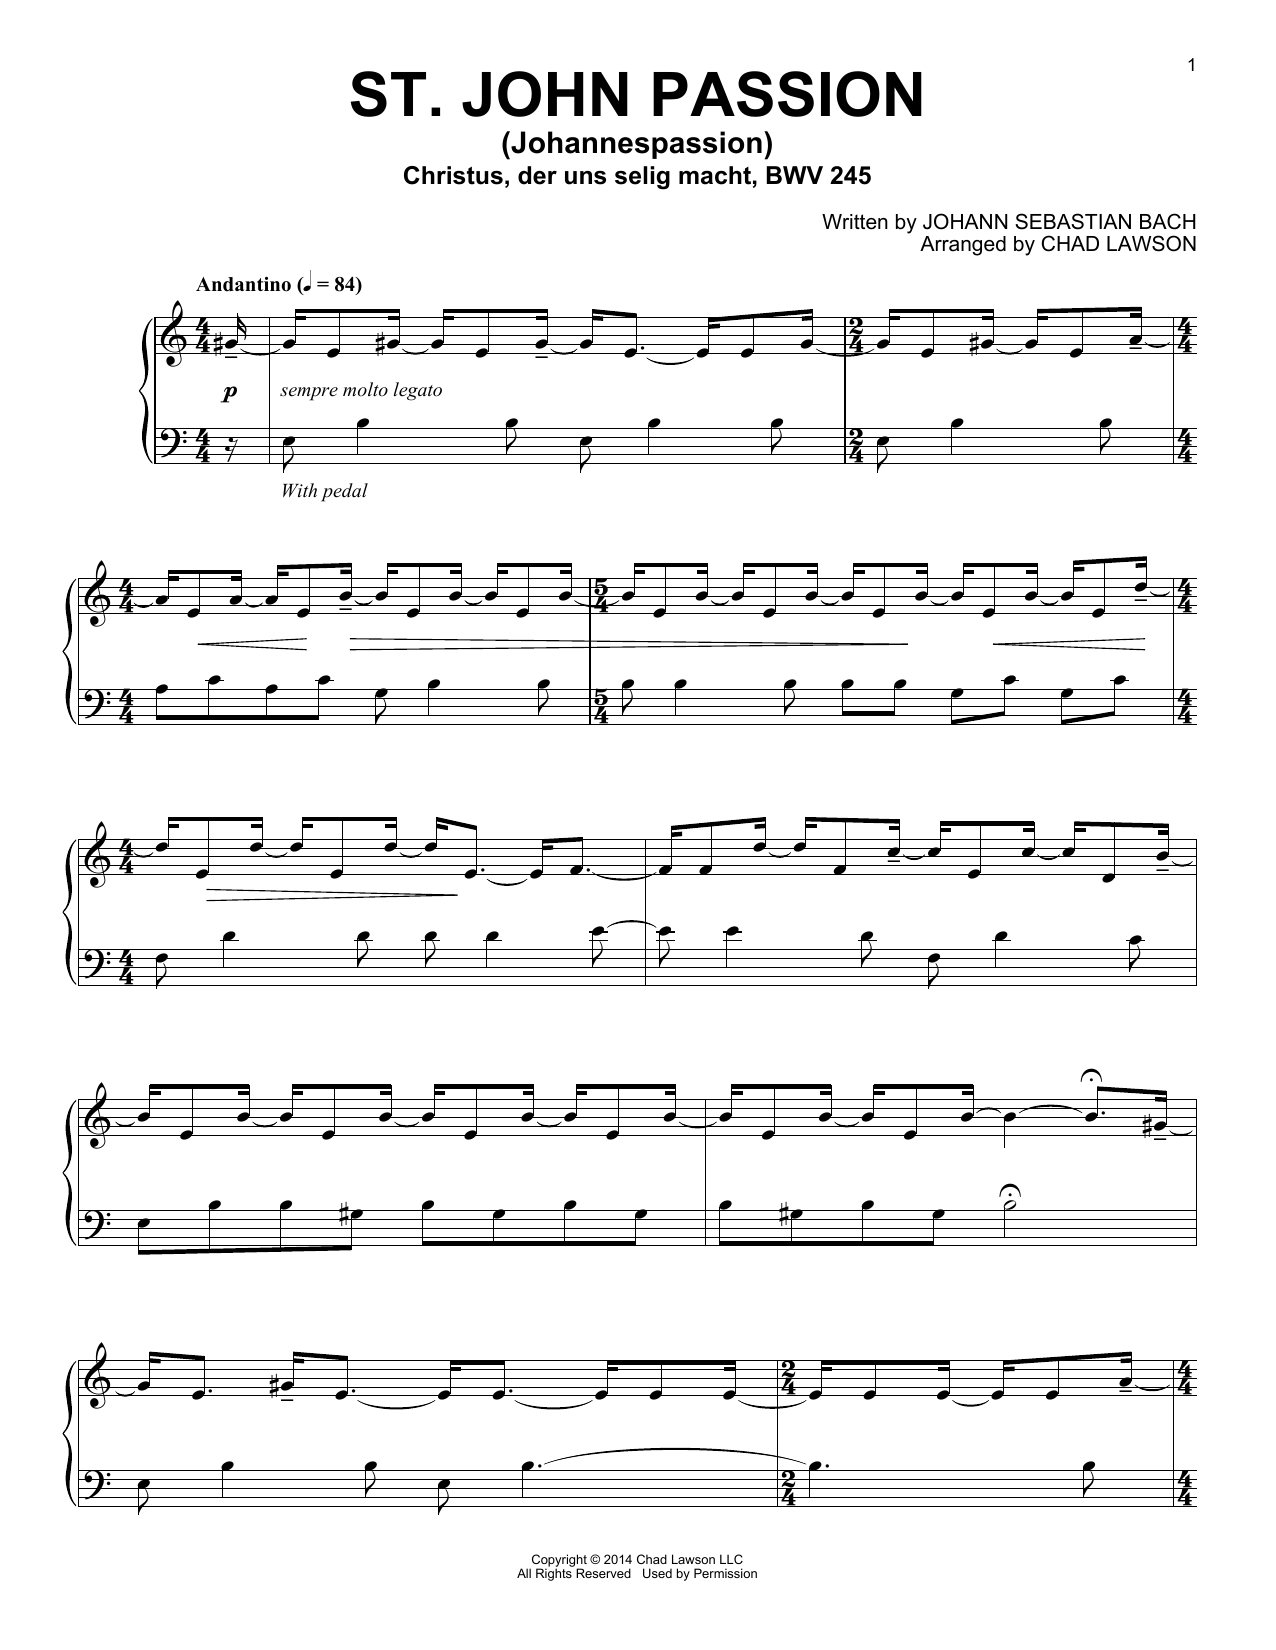 Johann Sebastian Bach St. John Passion (Johannespassion) Christus Der Uns Selig Macht, BWV 245 (arr. Chad Lawson) Sheet Music Notes & Chords for Piano Solo - Download or Print PDF